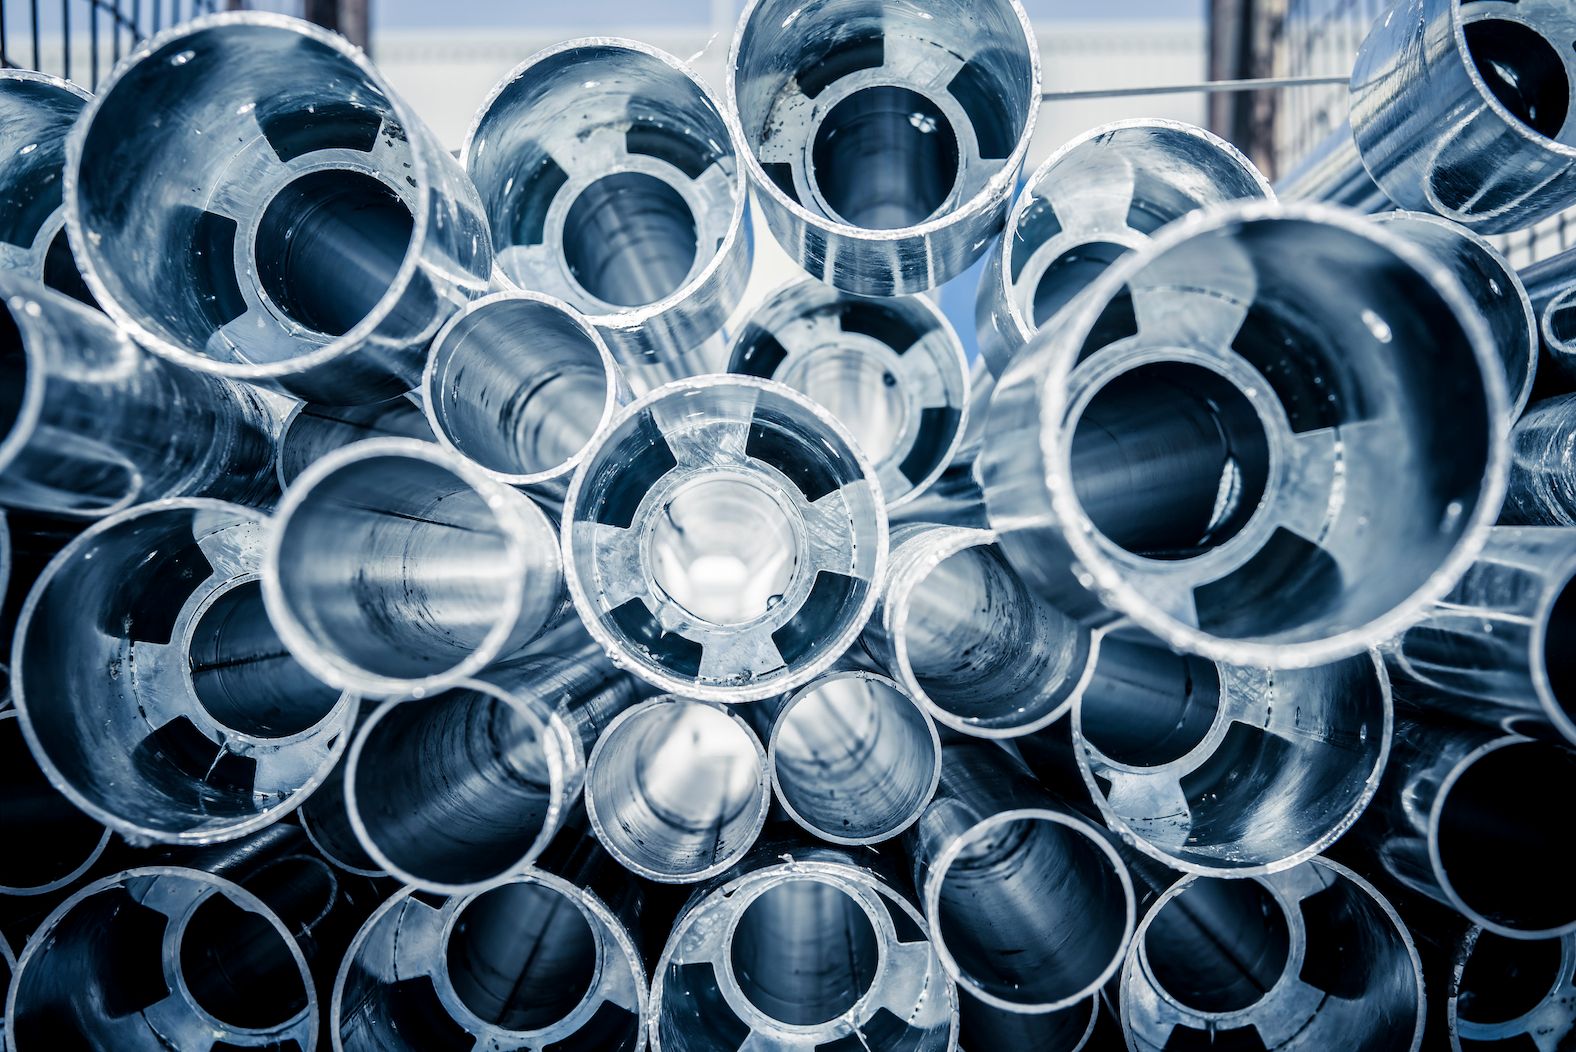 The sustainability of galvanized steel